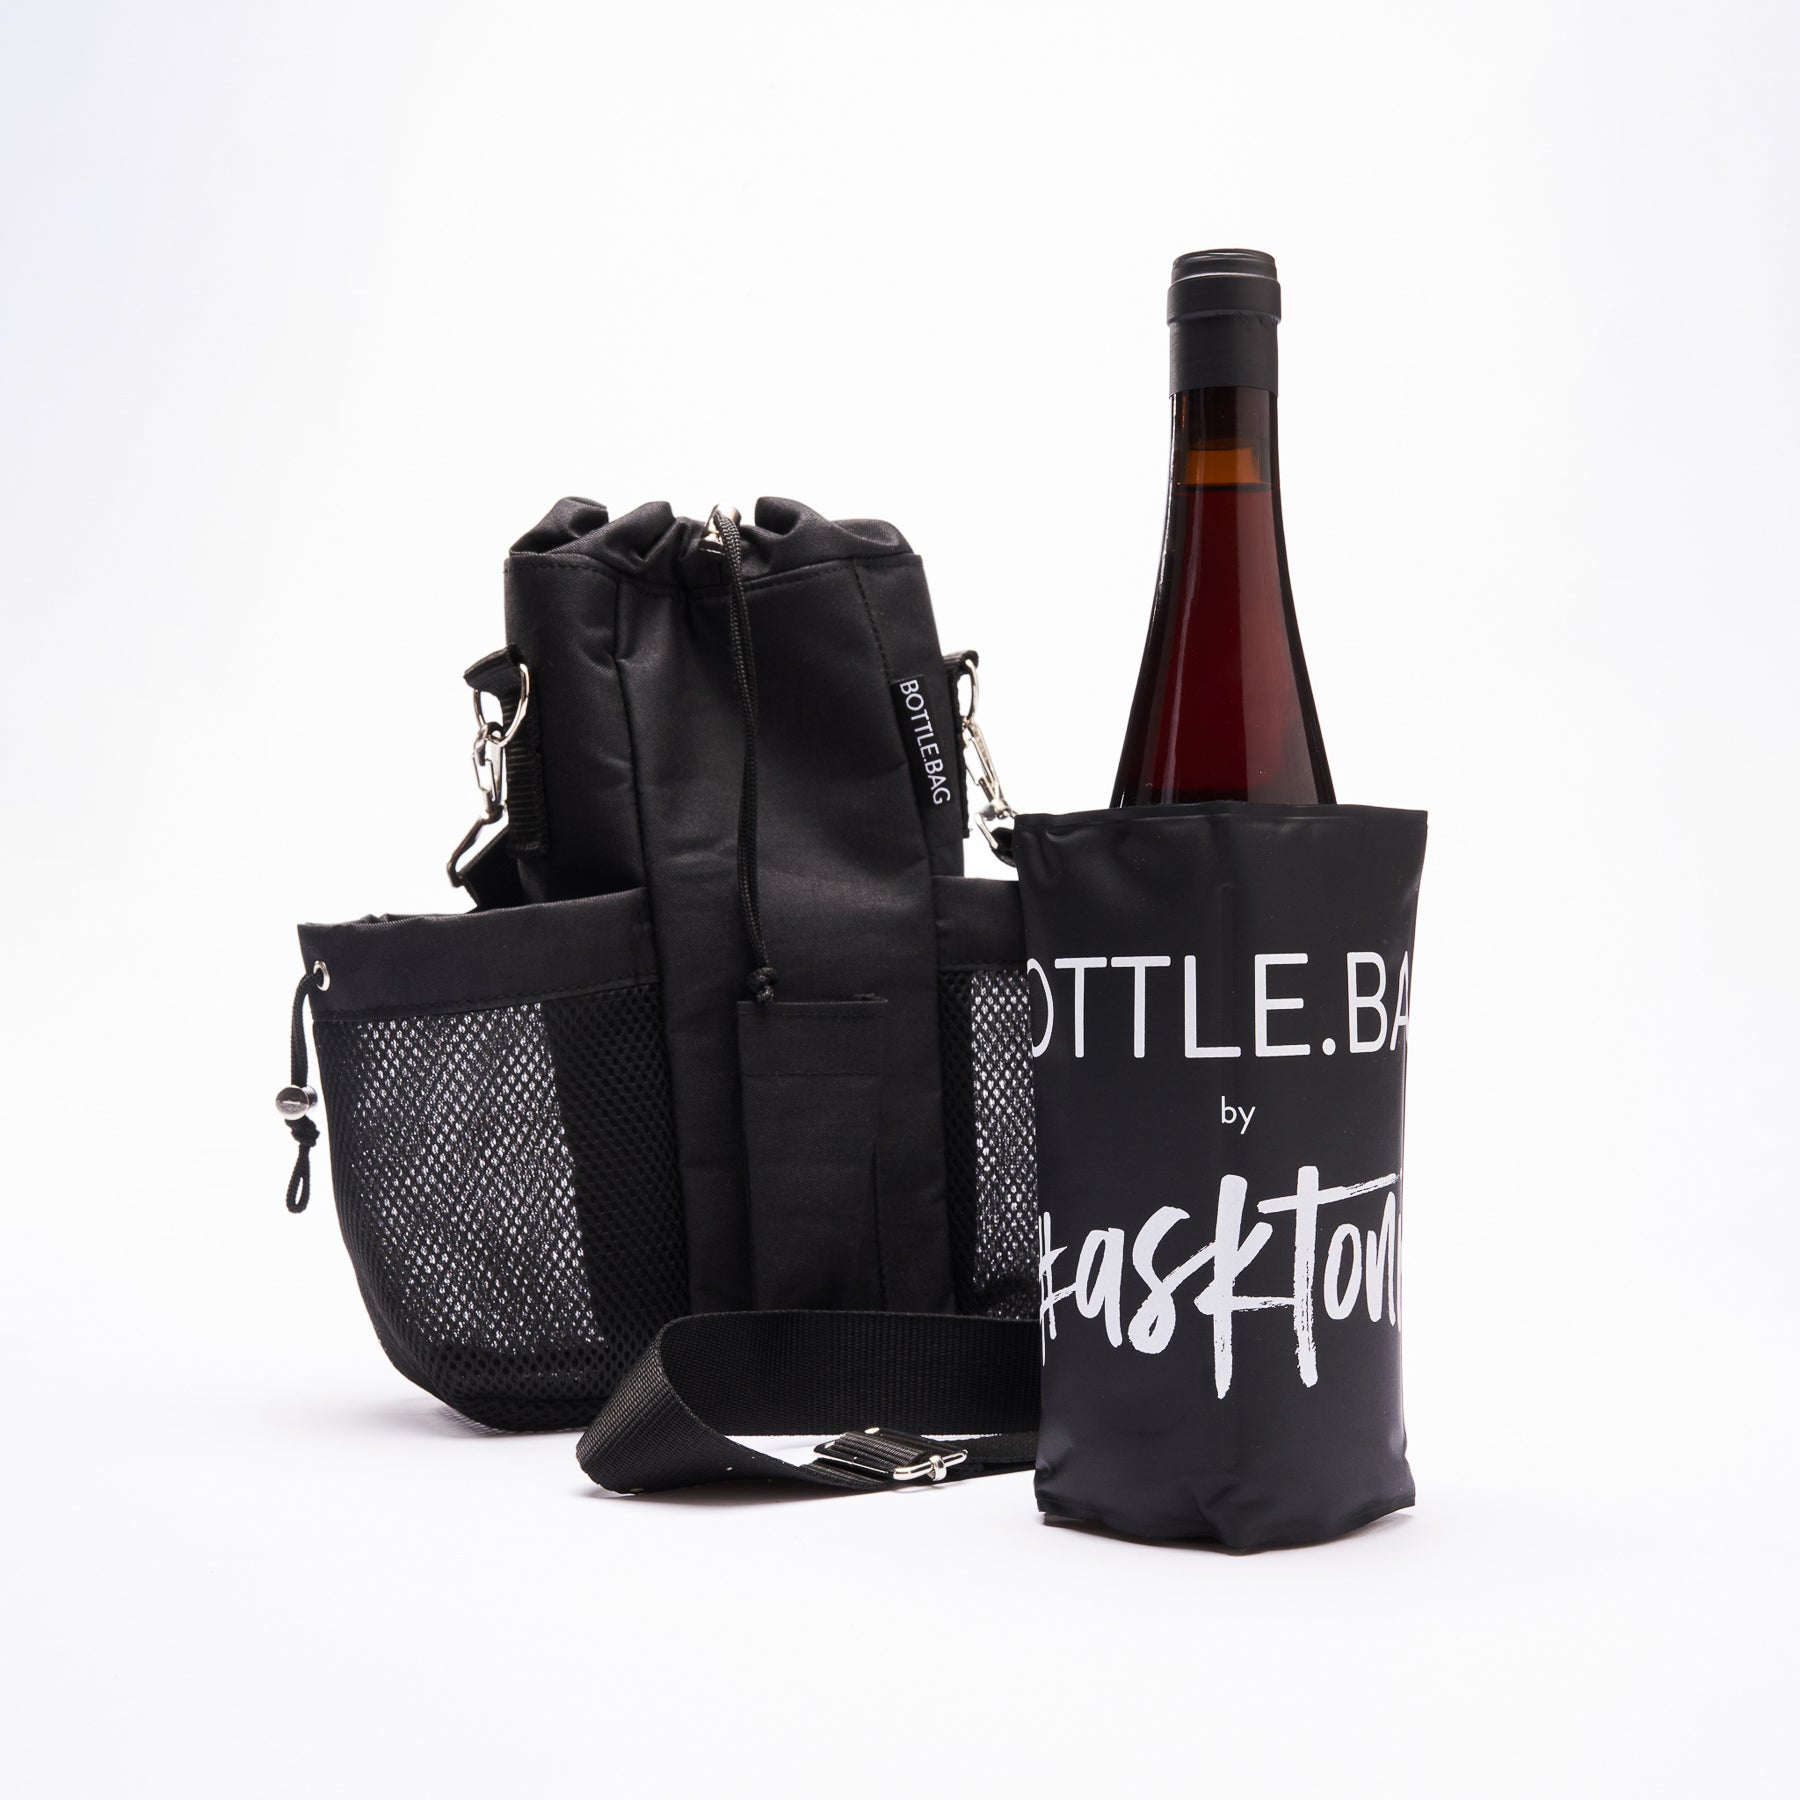 X-Mas Special: Bottle.Bag Black 2.0 + 1 Flasche Natural Glüh.Wein Rosé